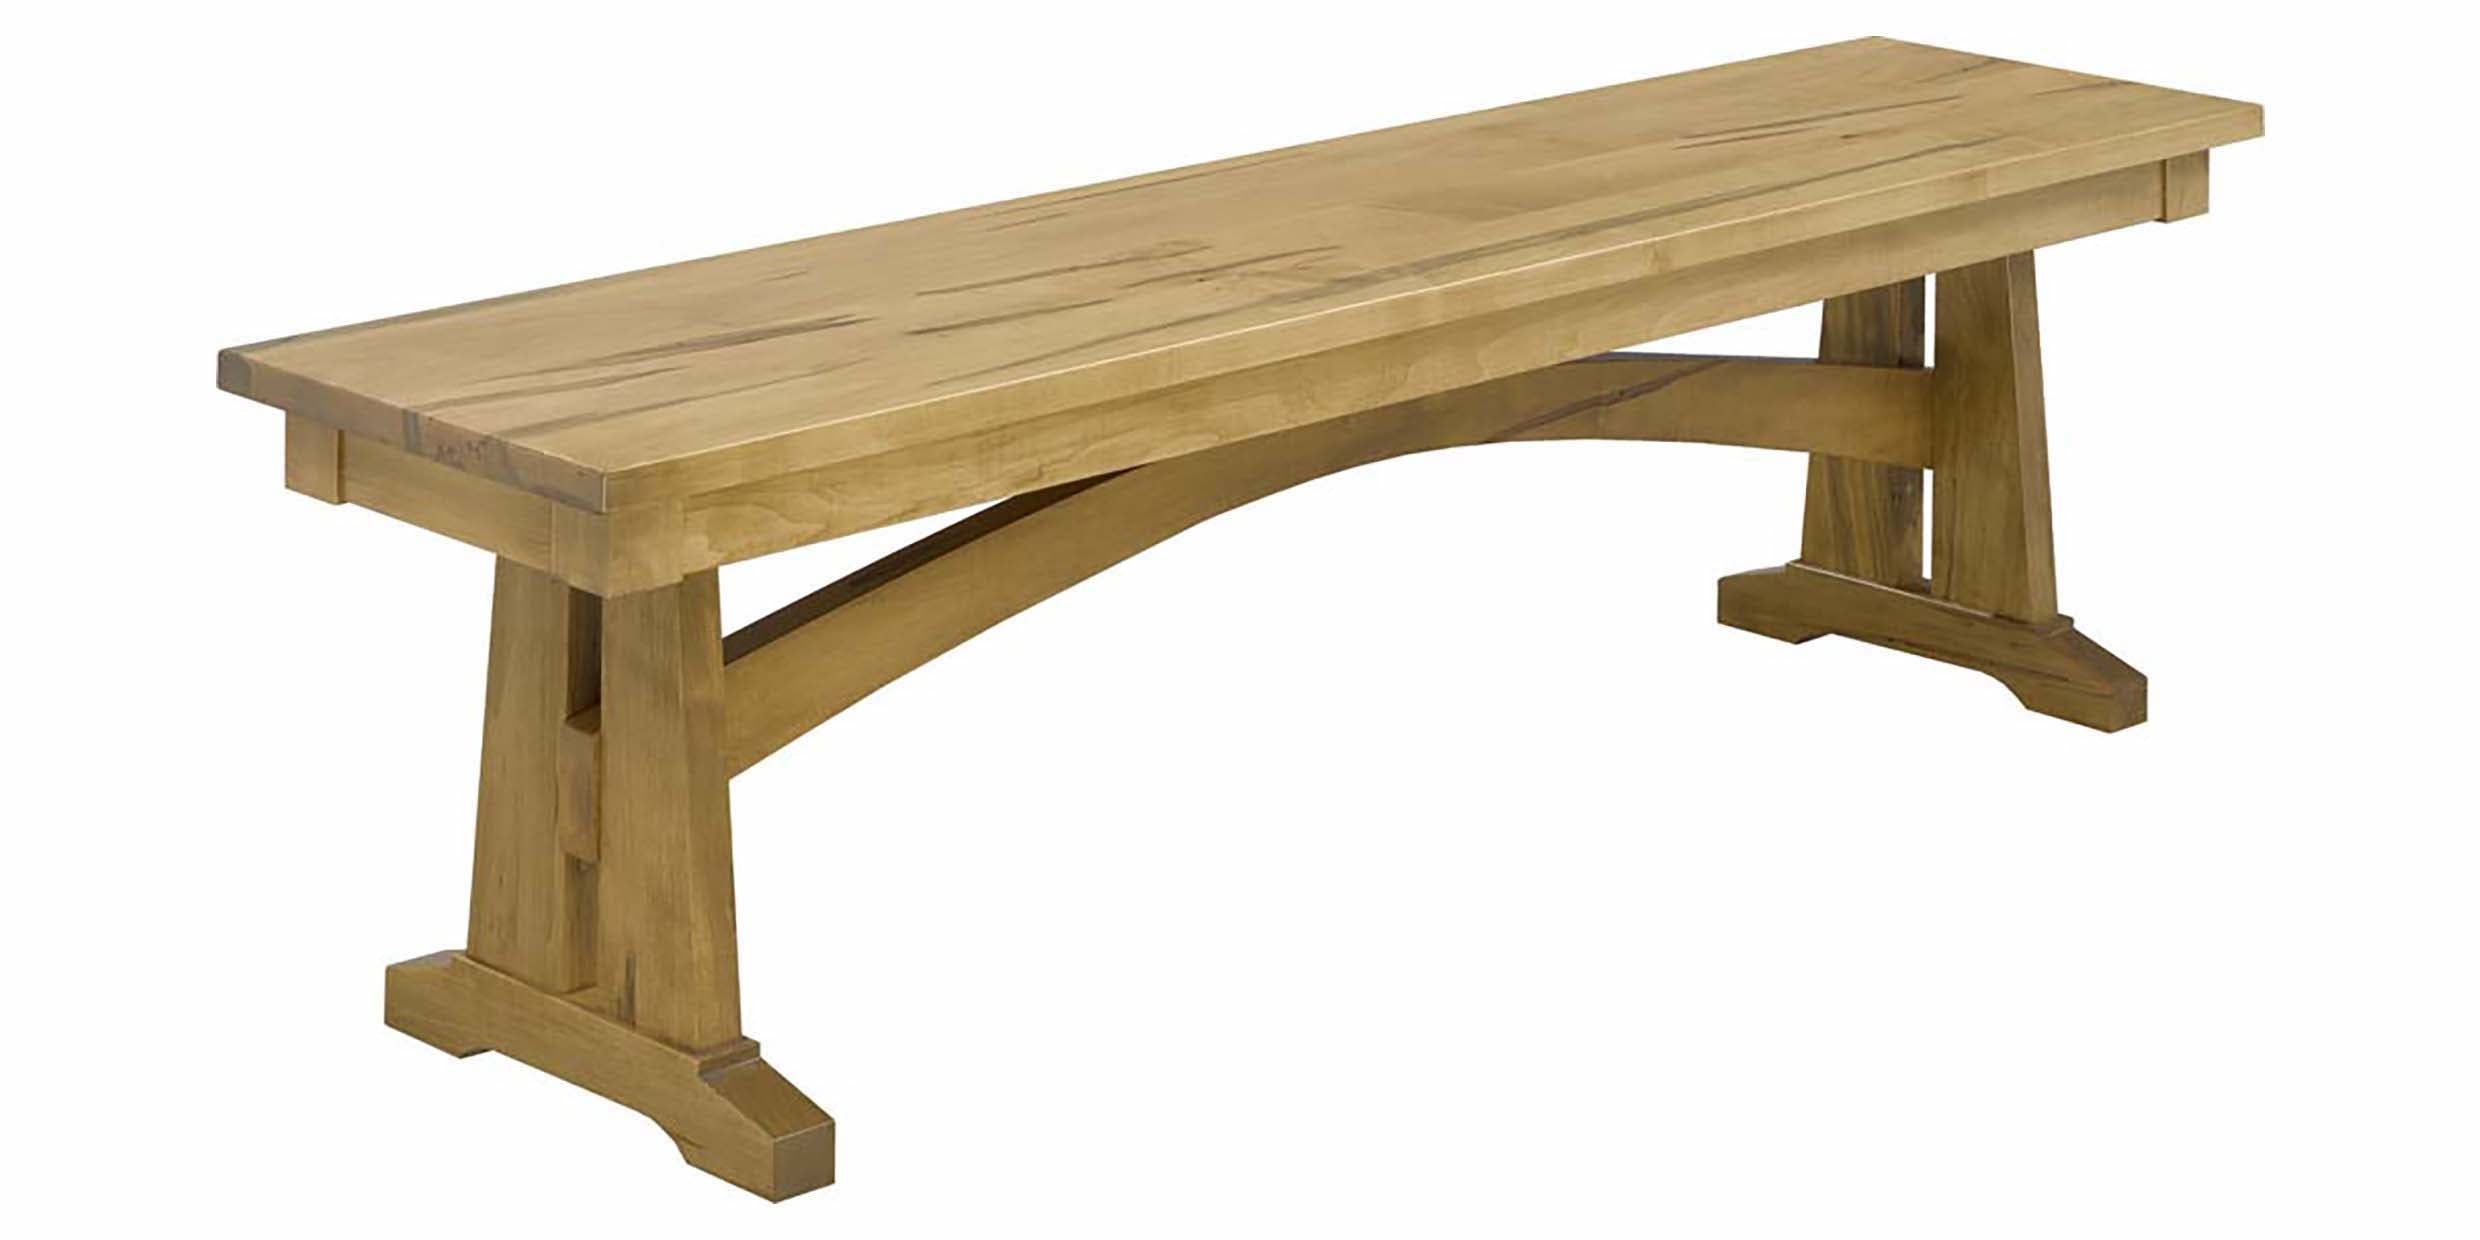 Bench as Shown | Cardinal Woodcraft Golden Gate Bench | Valley Ridge Furniture